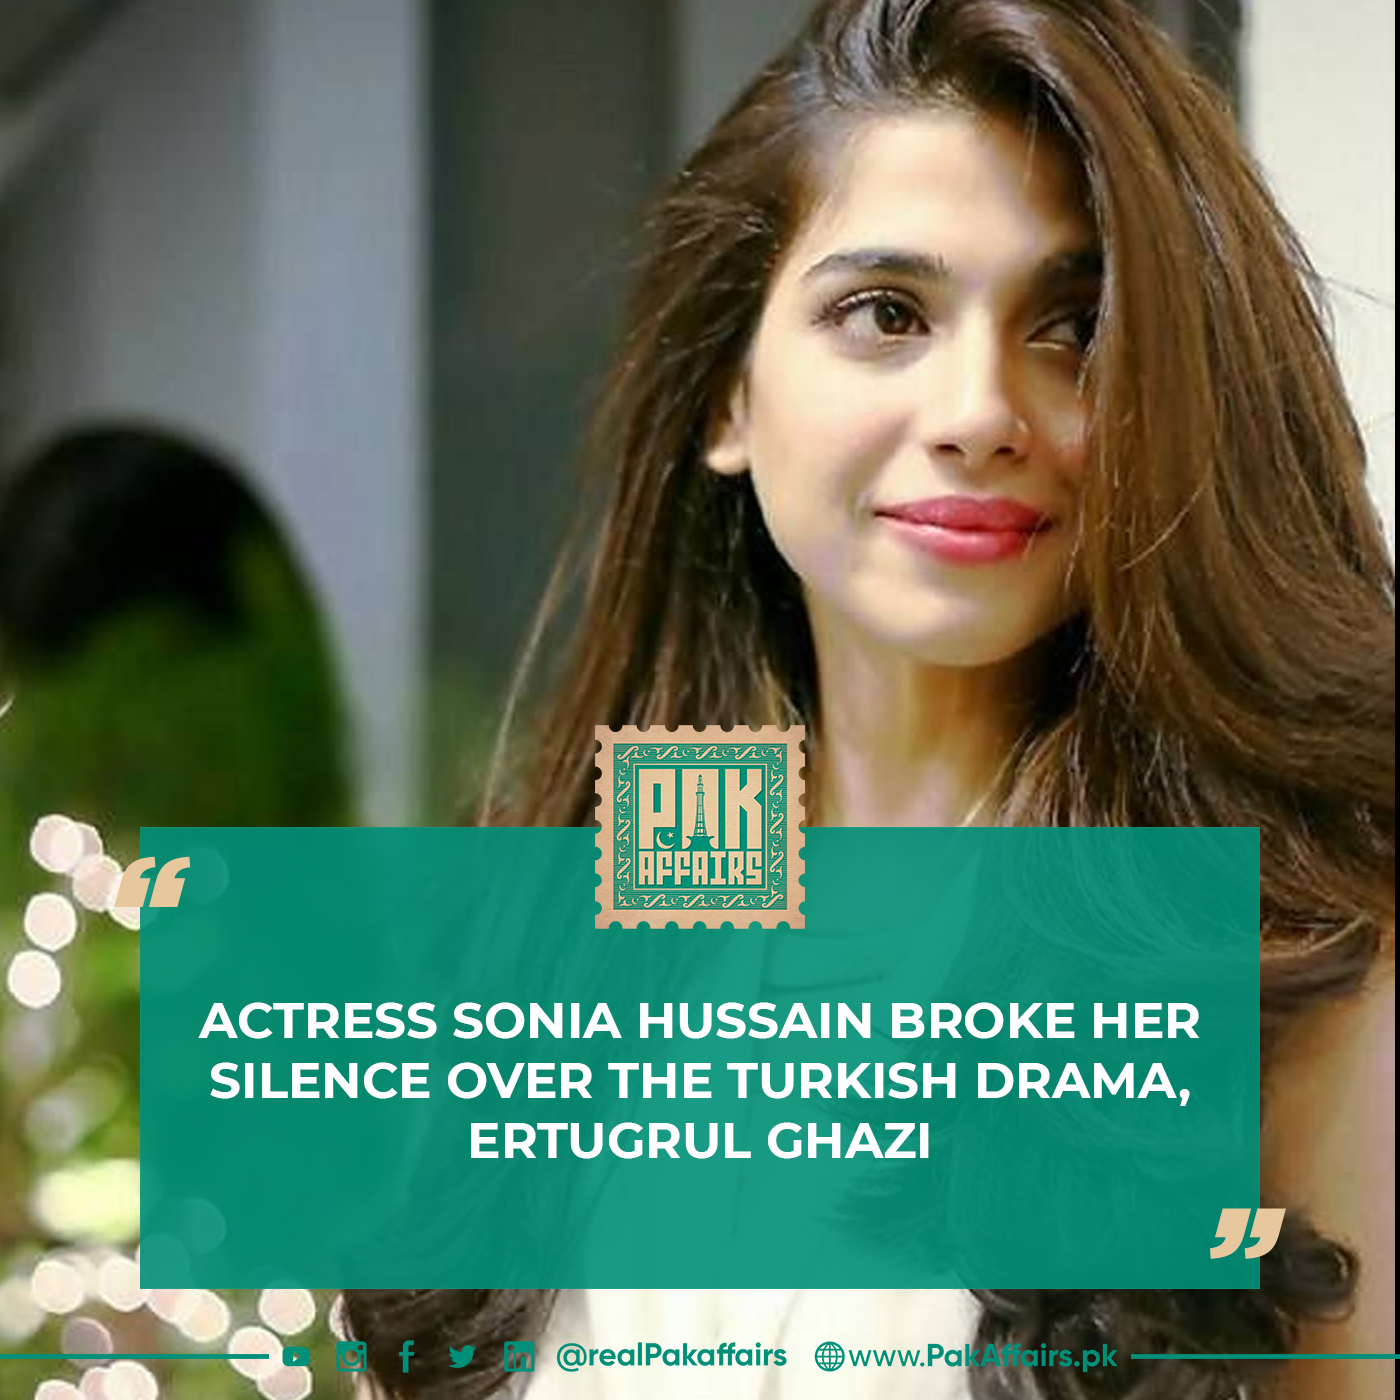 Actress Sonia Hussain broke her silence over the Turkish drama, Ertugrul Ghazi